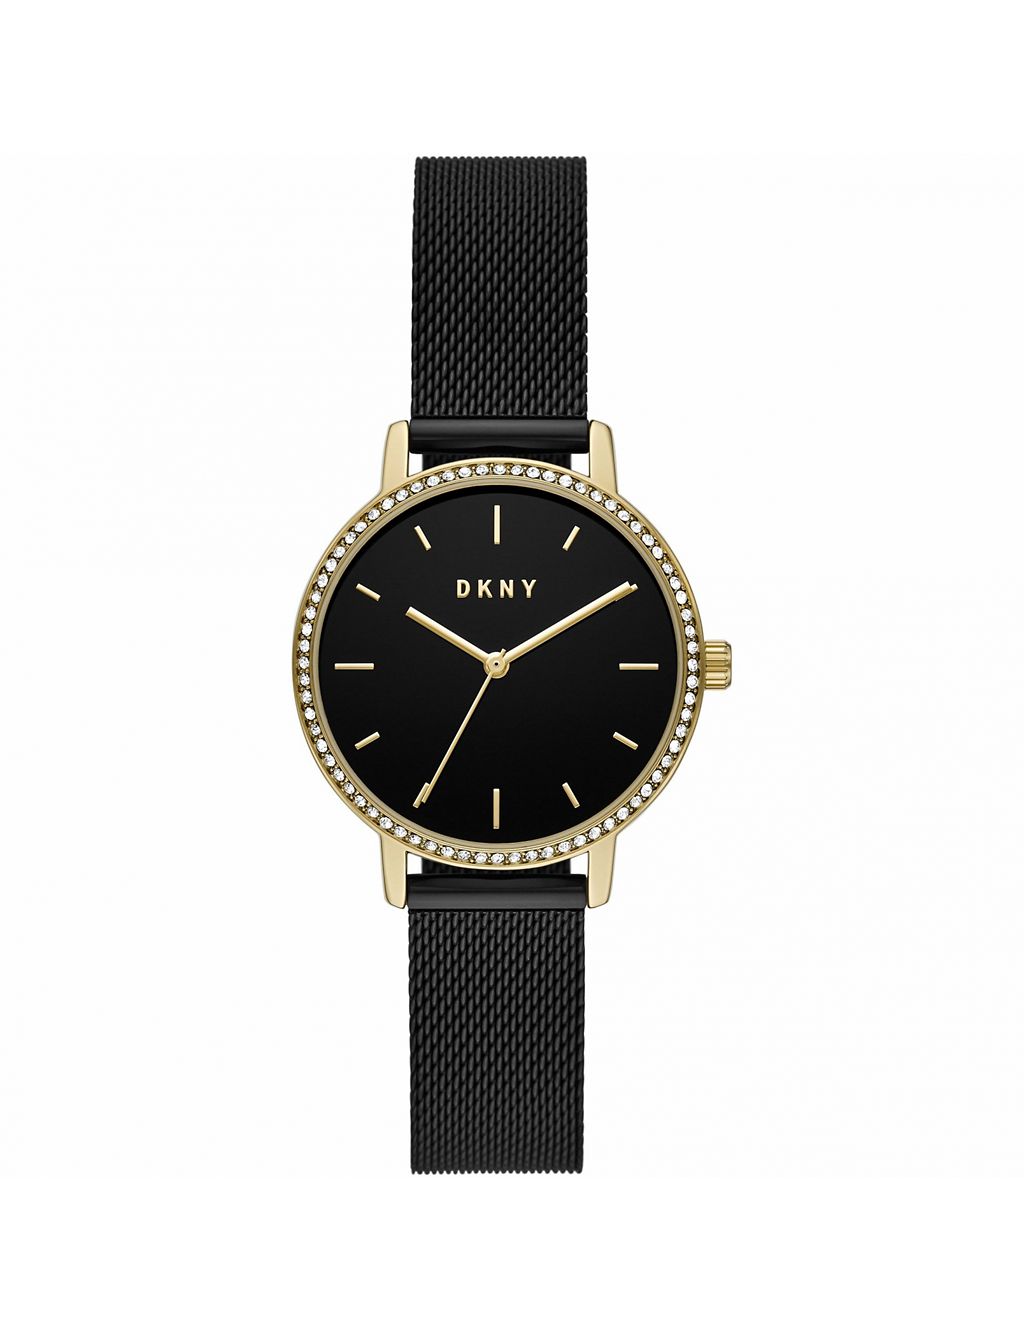 DKNY The Modernist Black Watch 3 of 7